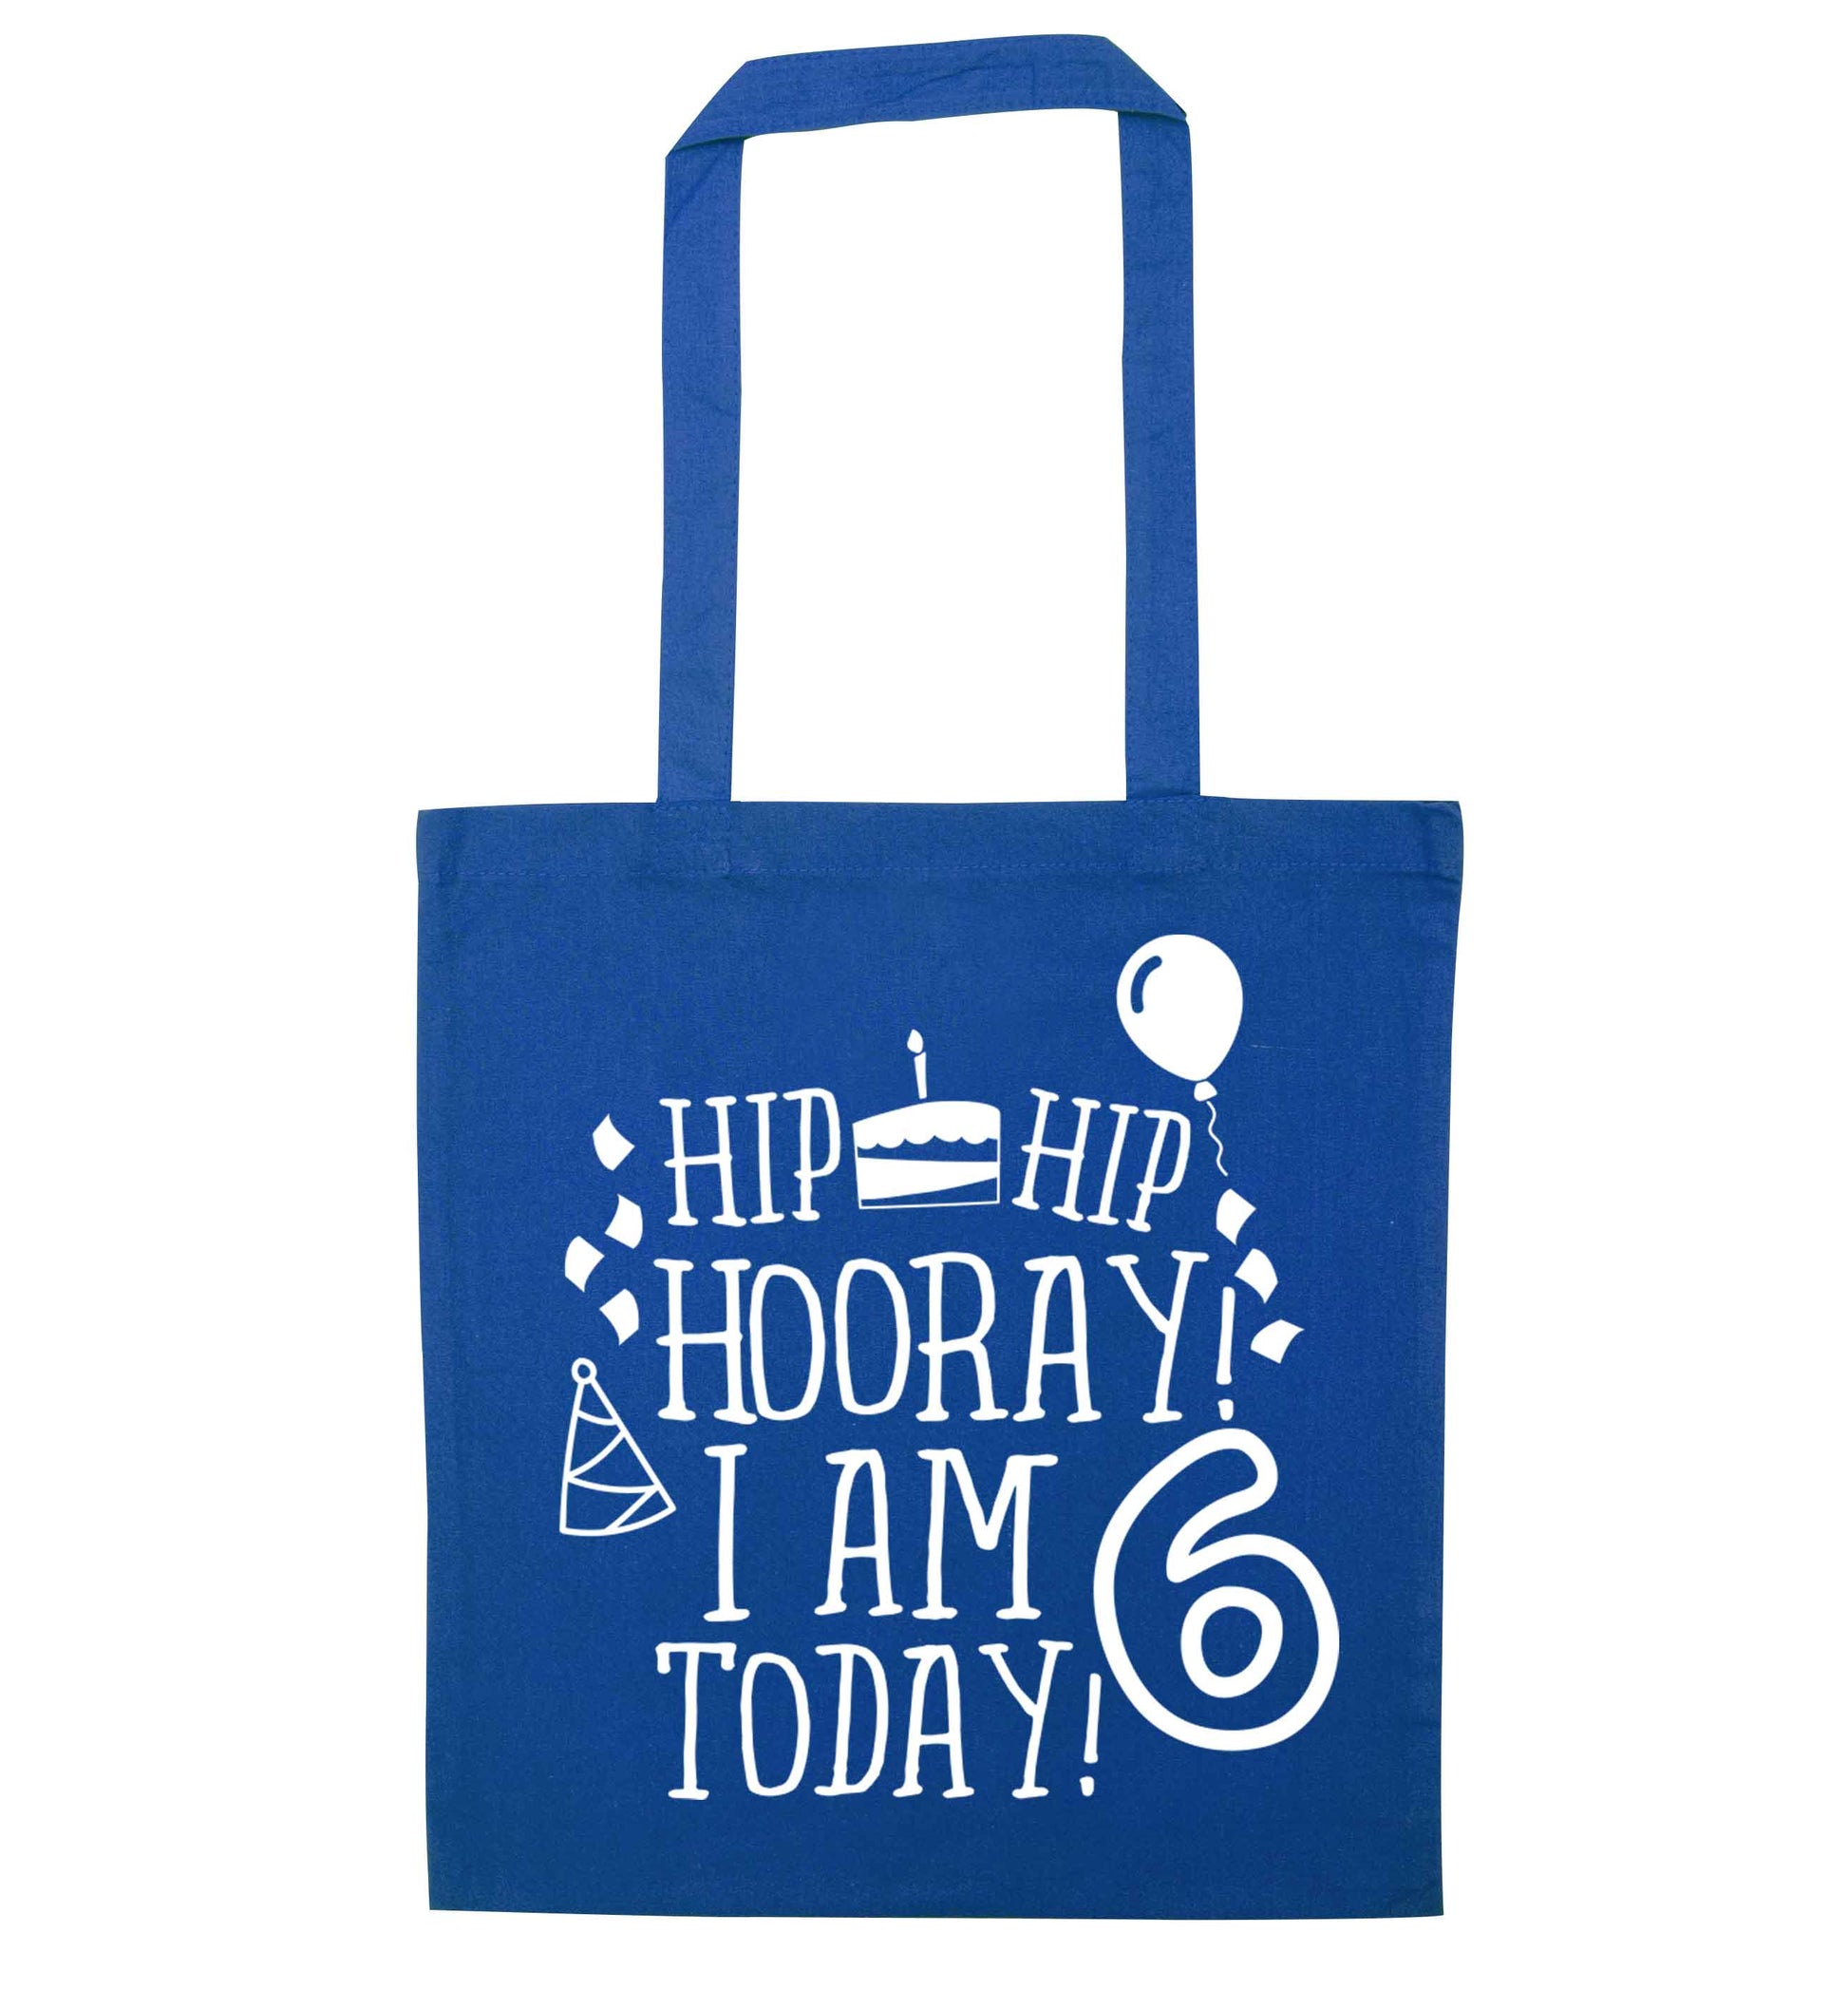 Hip hip hooray I am six today! blue tote bag